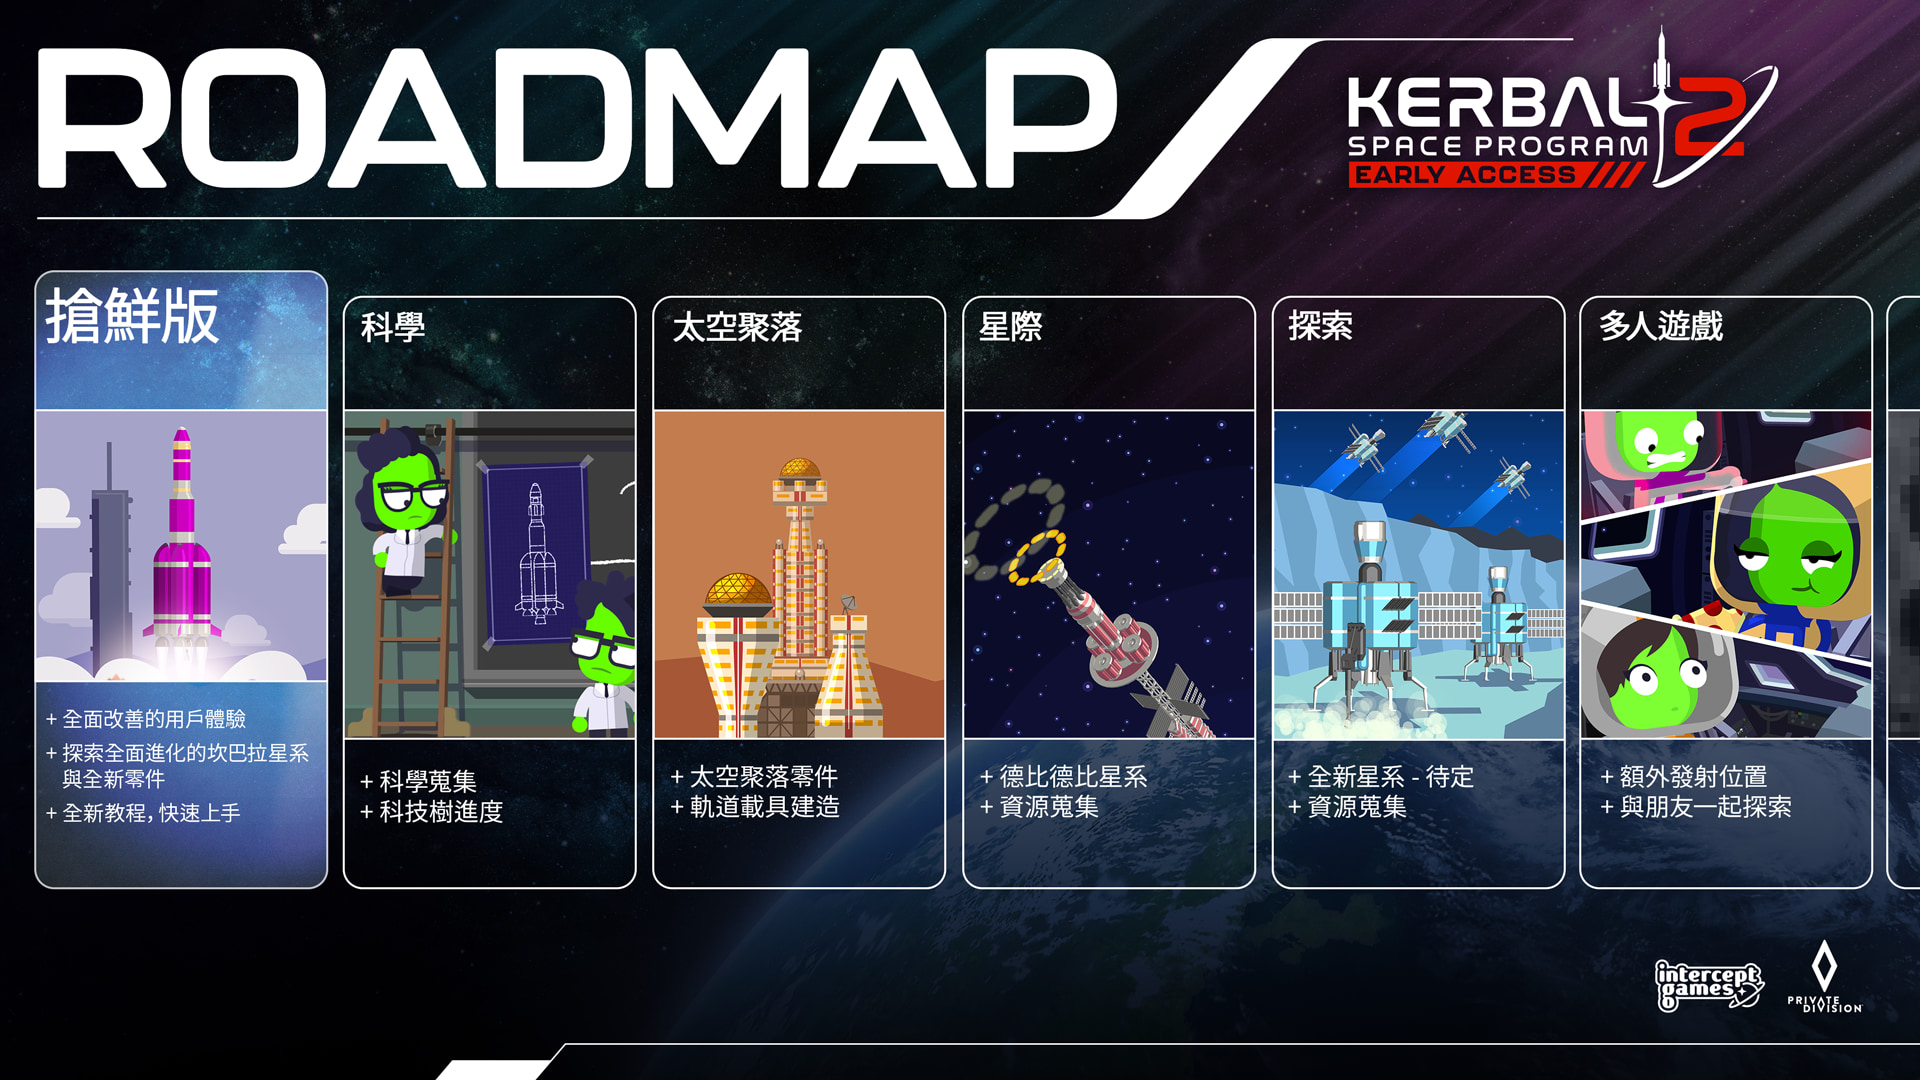 KSP2 Steam About ROADMAP TCH